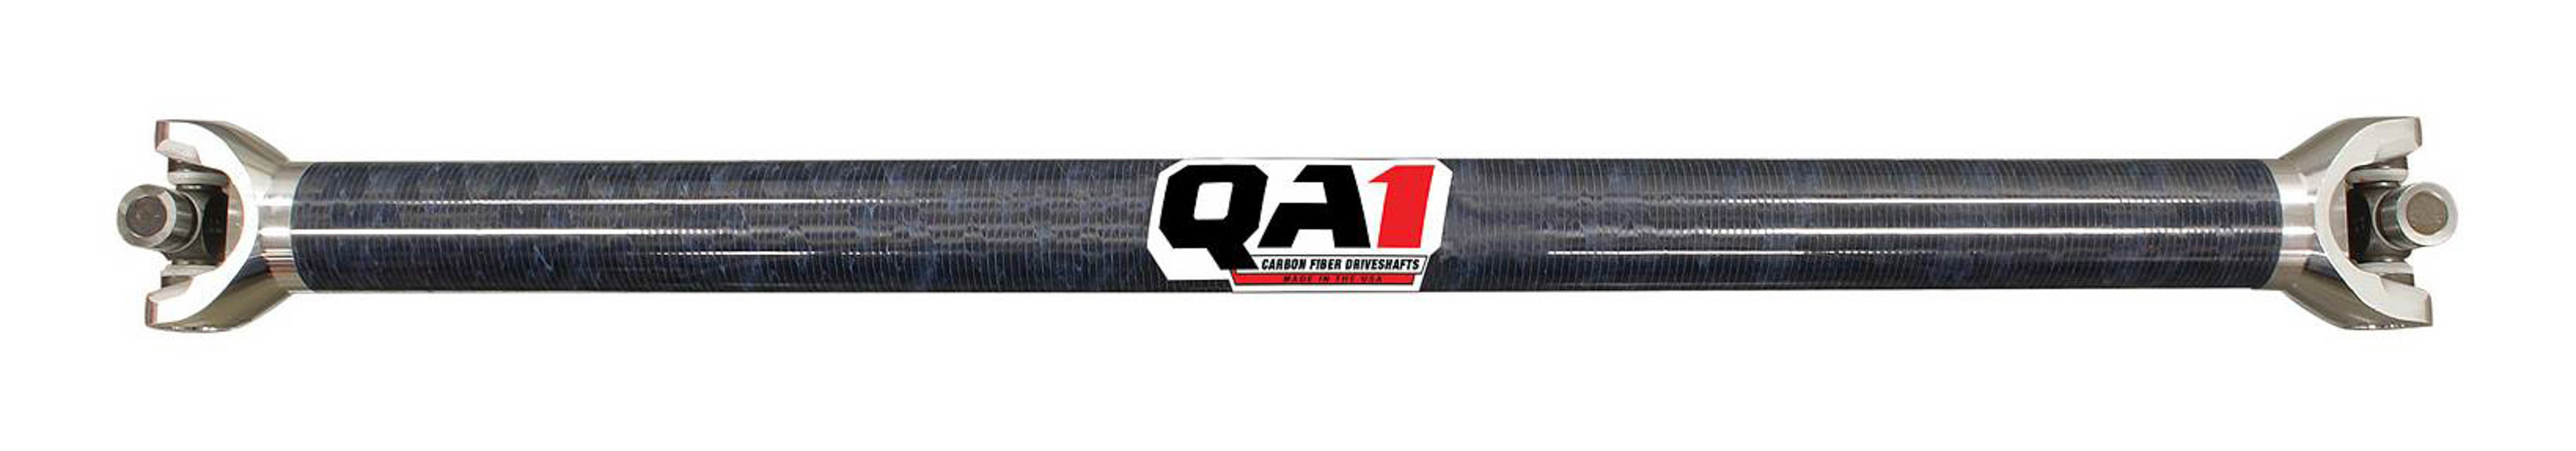 QA1 JJ-11220 Drive Shaft, Dirt Late Model, 37.5 in Long, 2.25 in OD, 1310 U-Joints, Carbon Fiber, Universal, Each